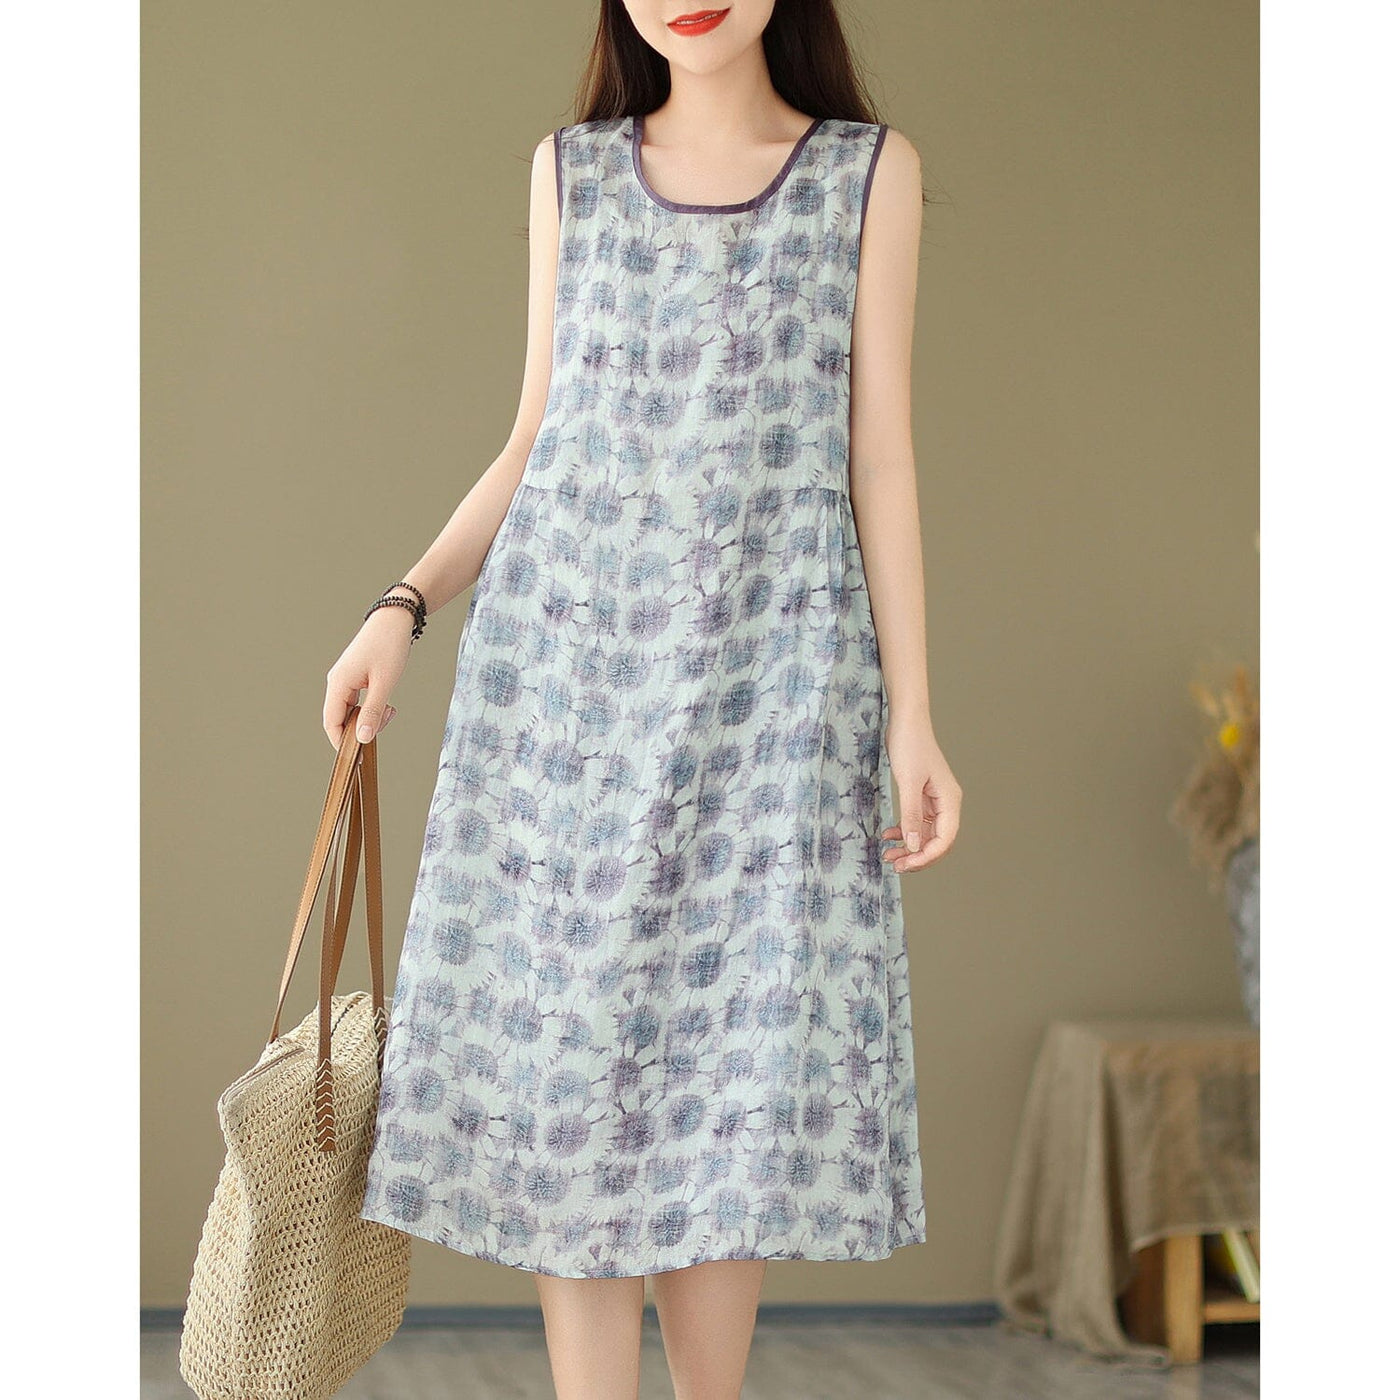 Summer Stylish Casual Sleeveless Linen Floral Dress